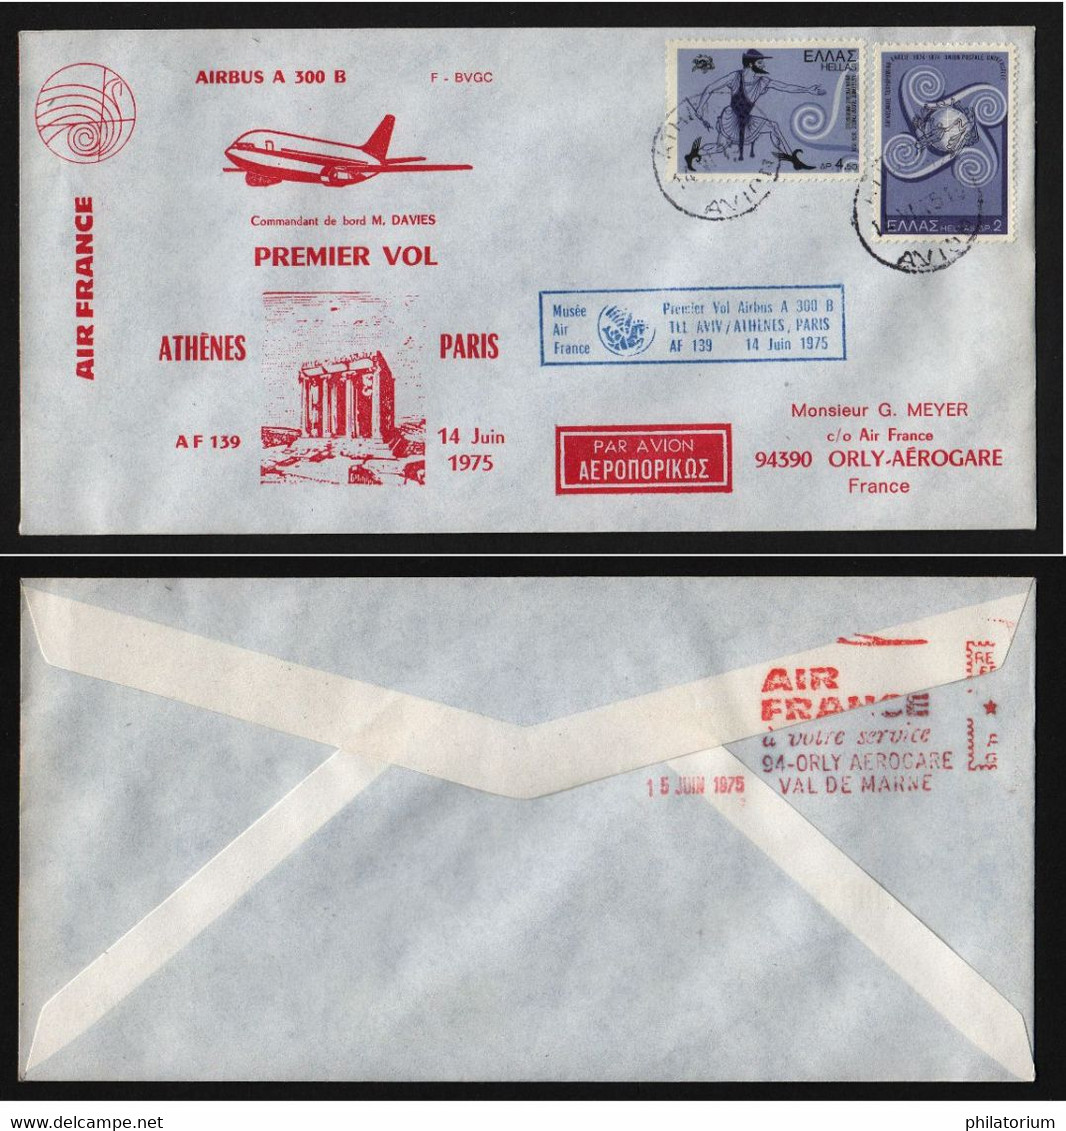 ATHENES  14 Juin 1975  1° Vol Airbus A 300 B  Tel Aviv - Athènes - Paris - Postal Logo & Postmarks